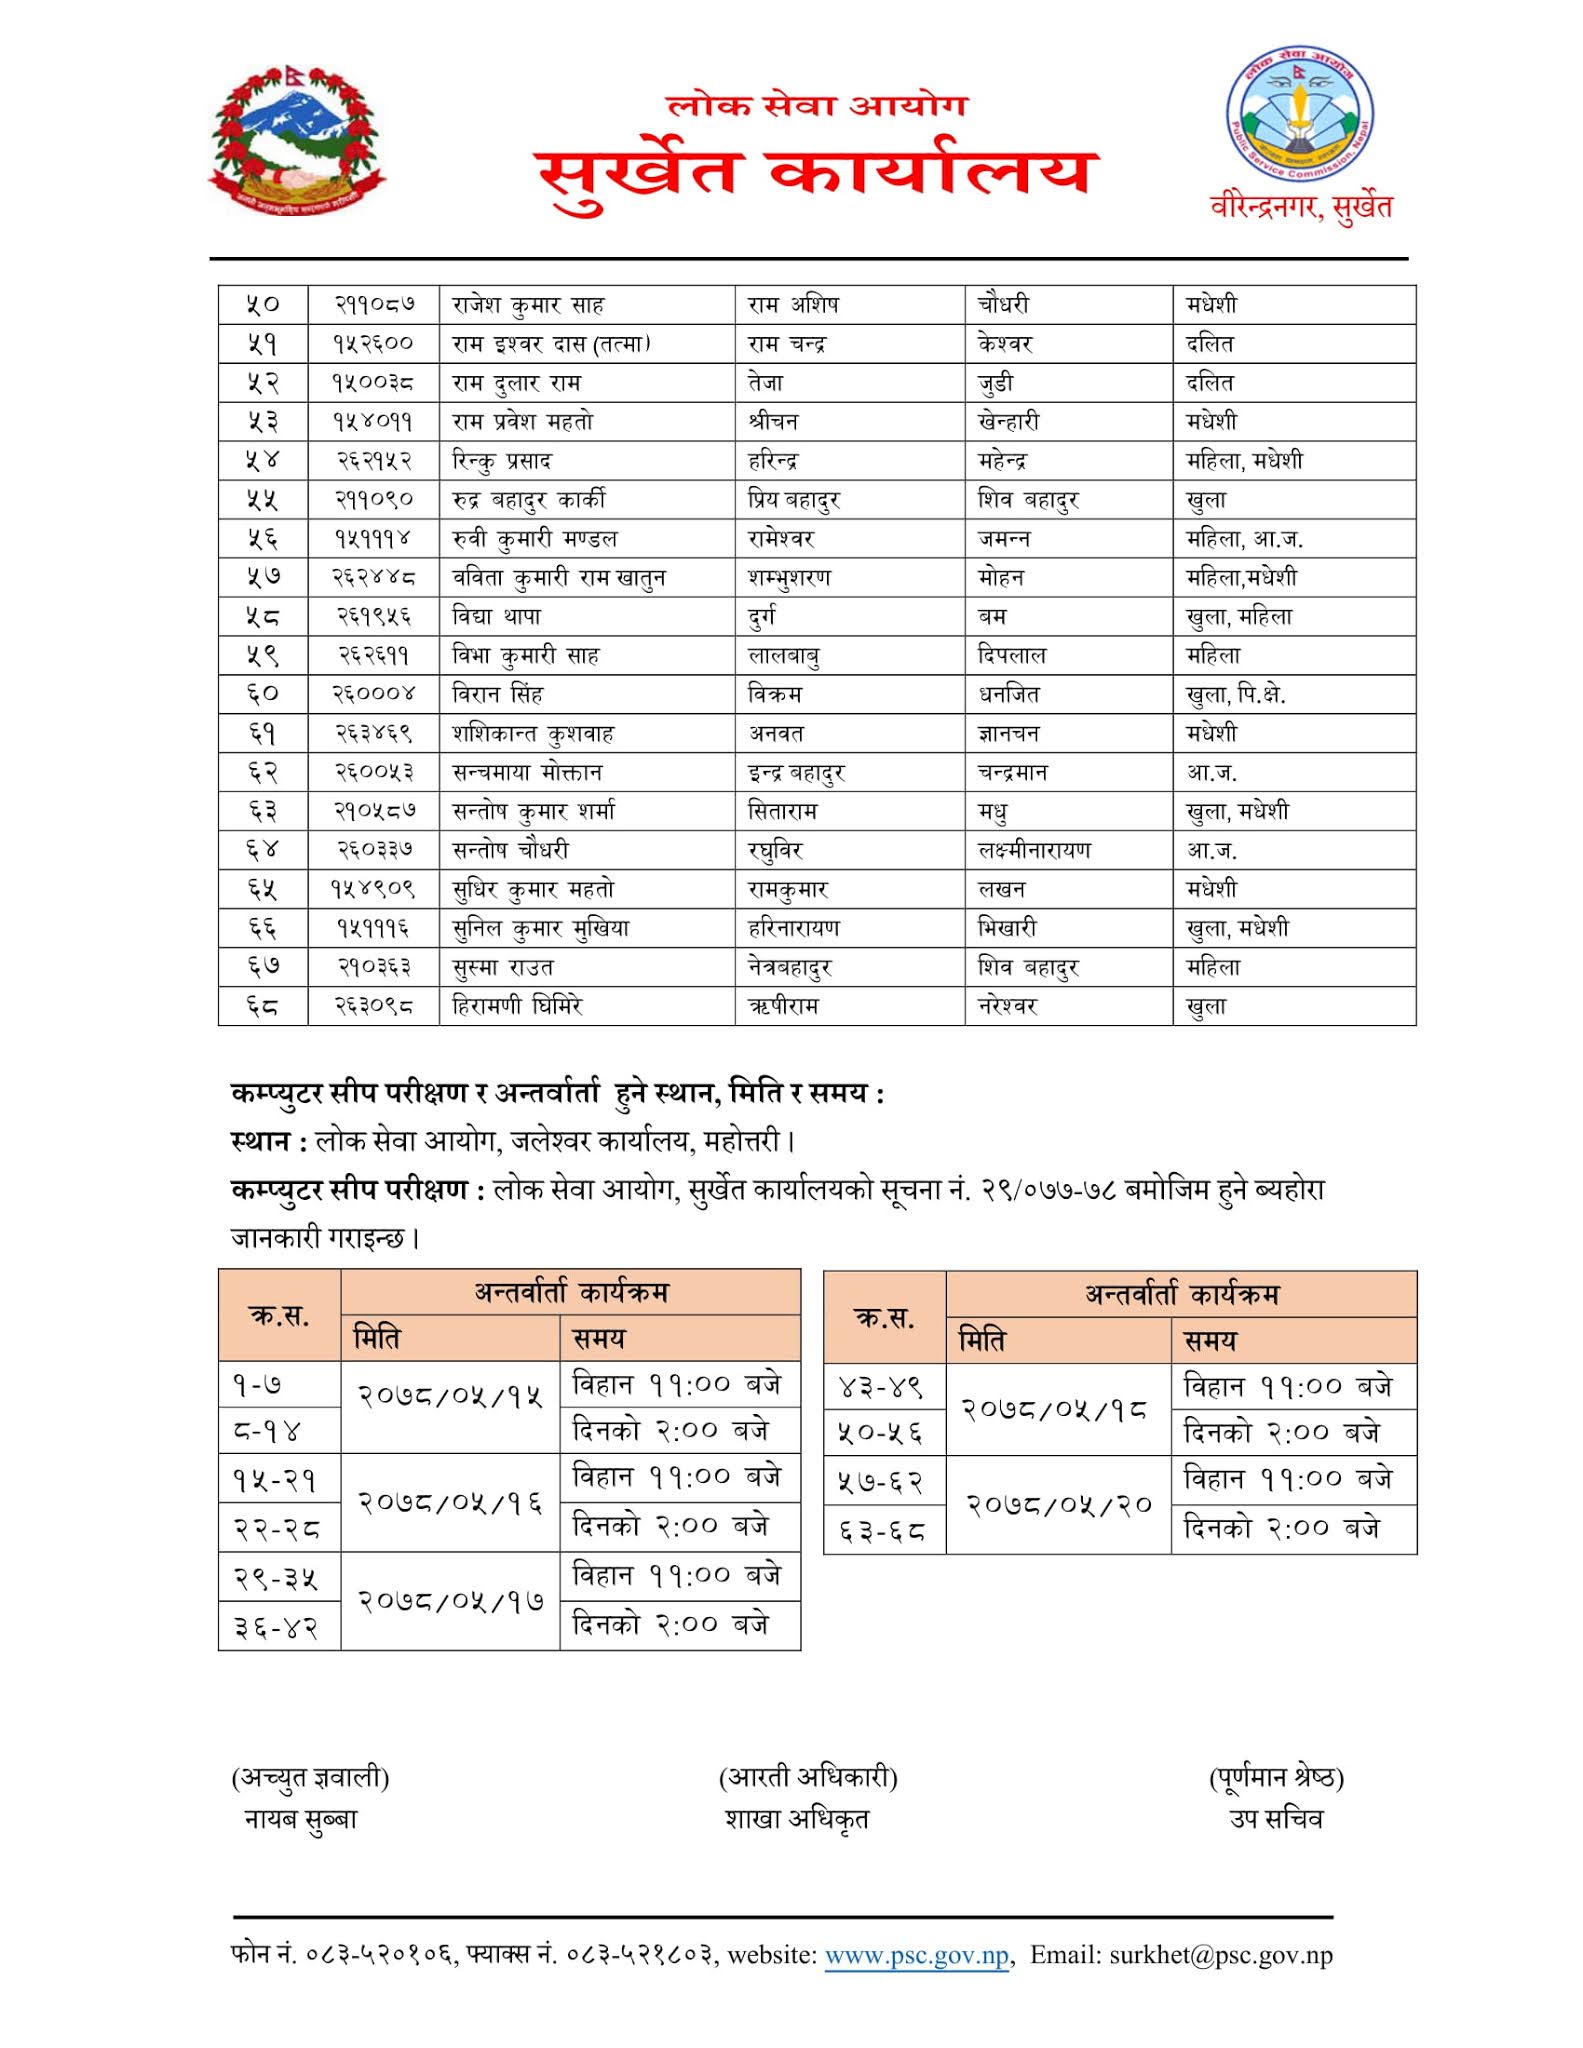 Jaleshwor Lok Sewa Aayog Written Exam Result & Exam Schedule of NASU Justice, Law and Public Prosecutor published by Surkhet Lok Sewa Aayog